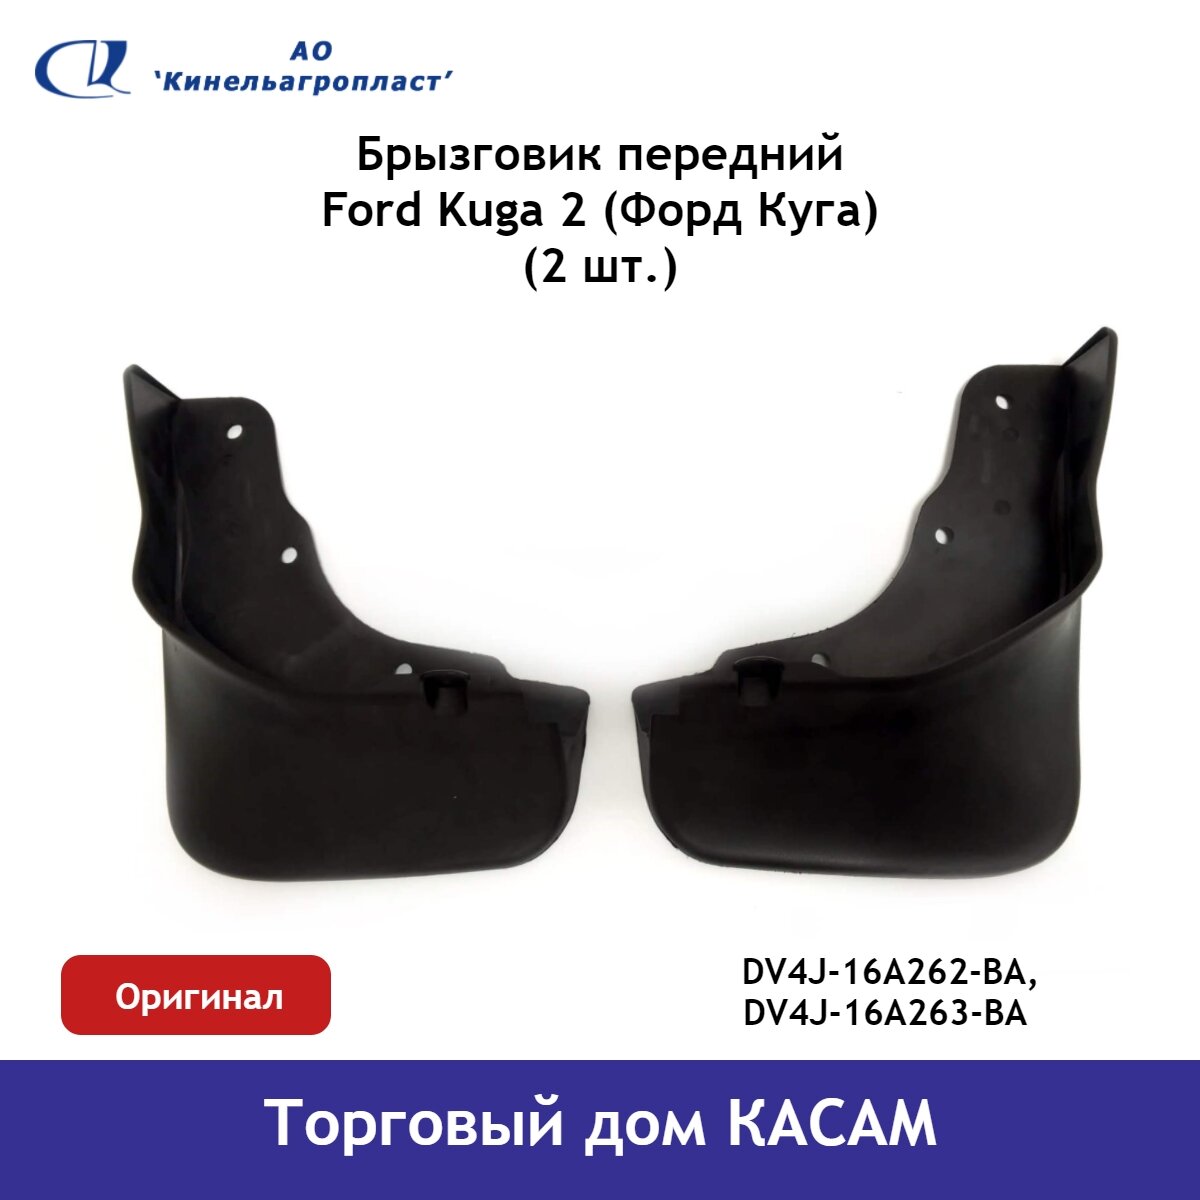 Брызговик передний Ford Kuga (Форд Куга) комплект